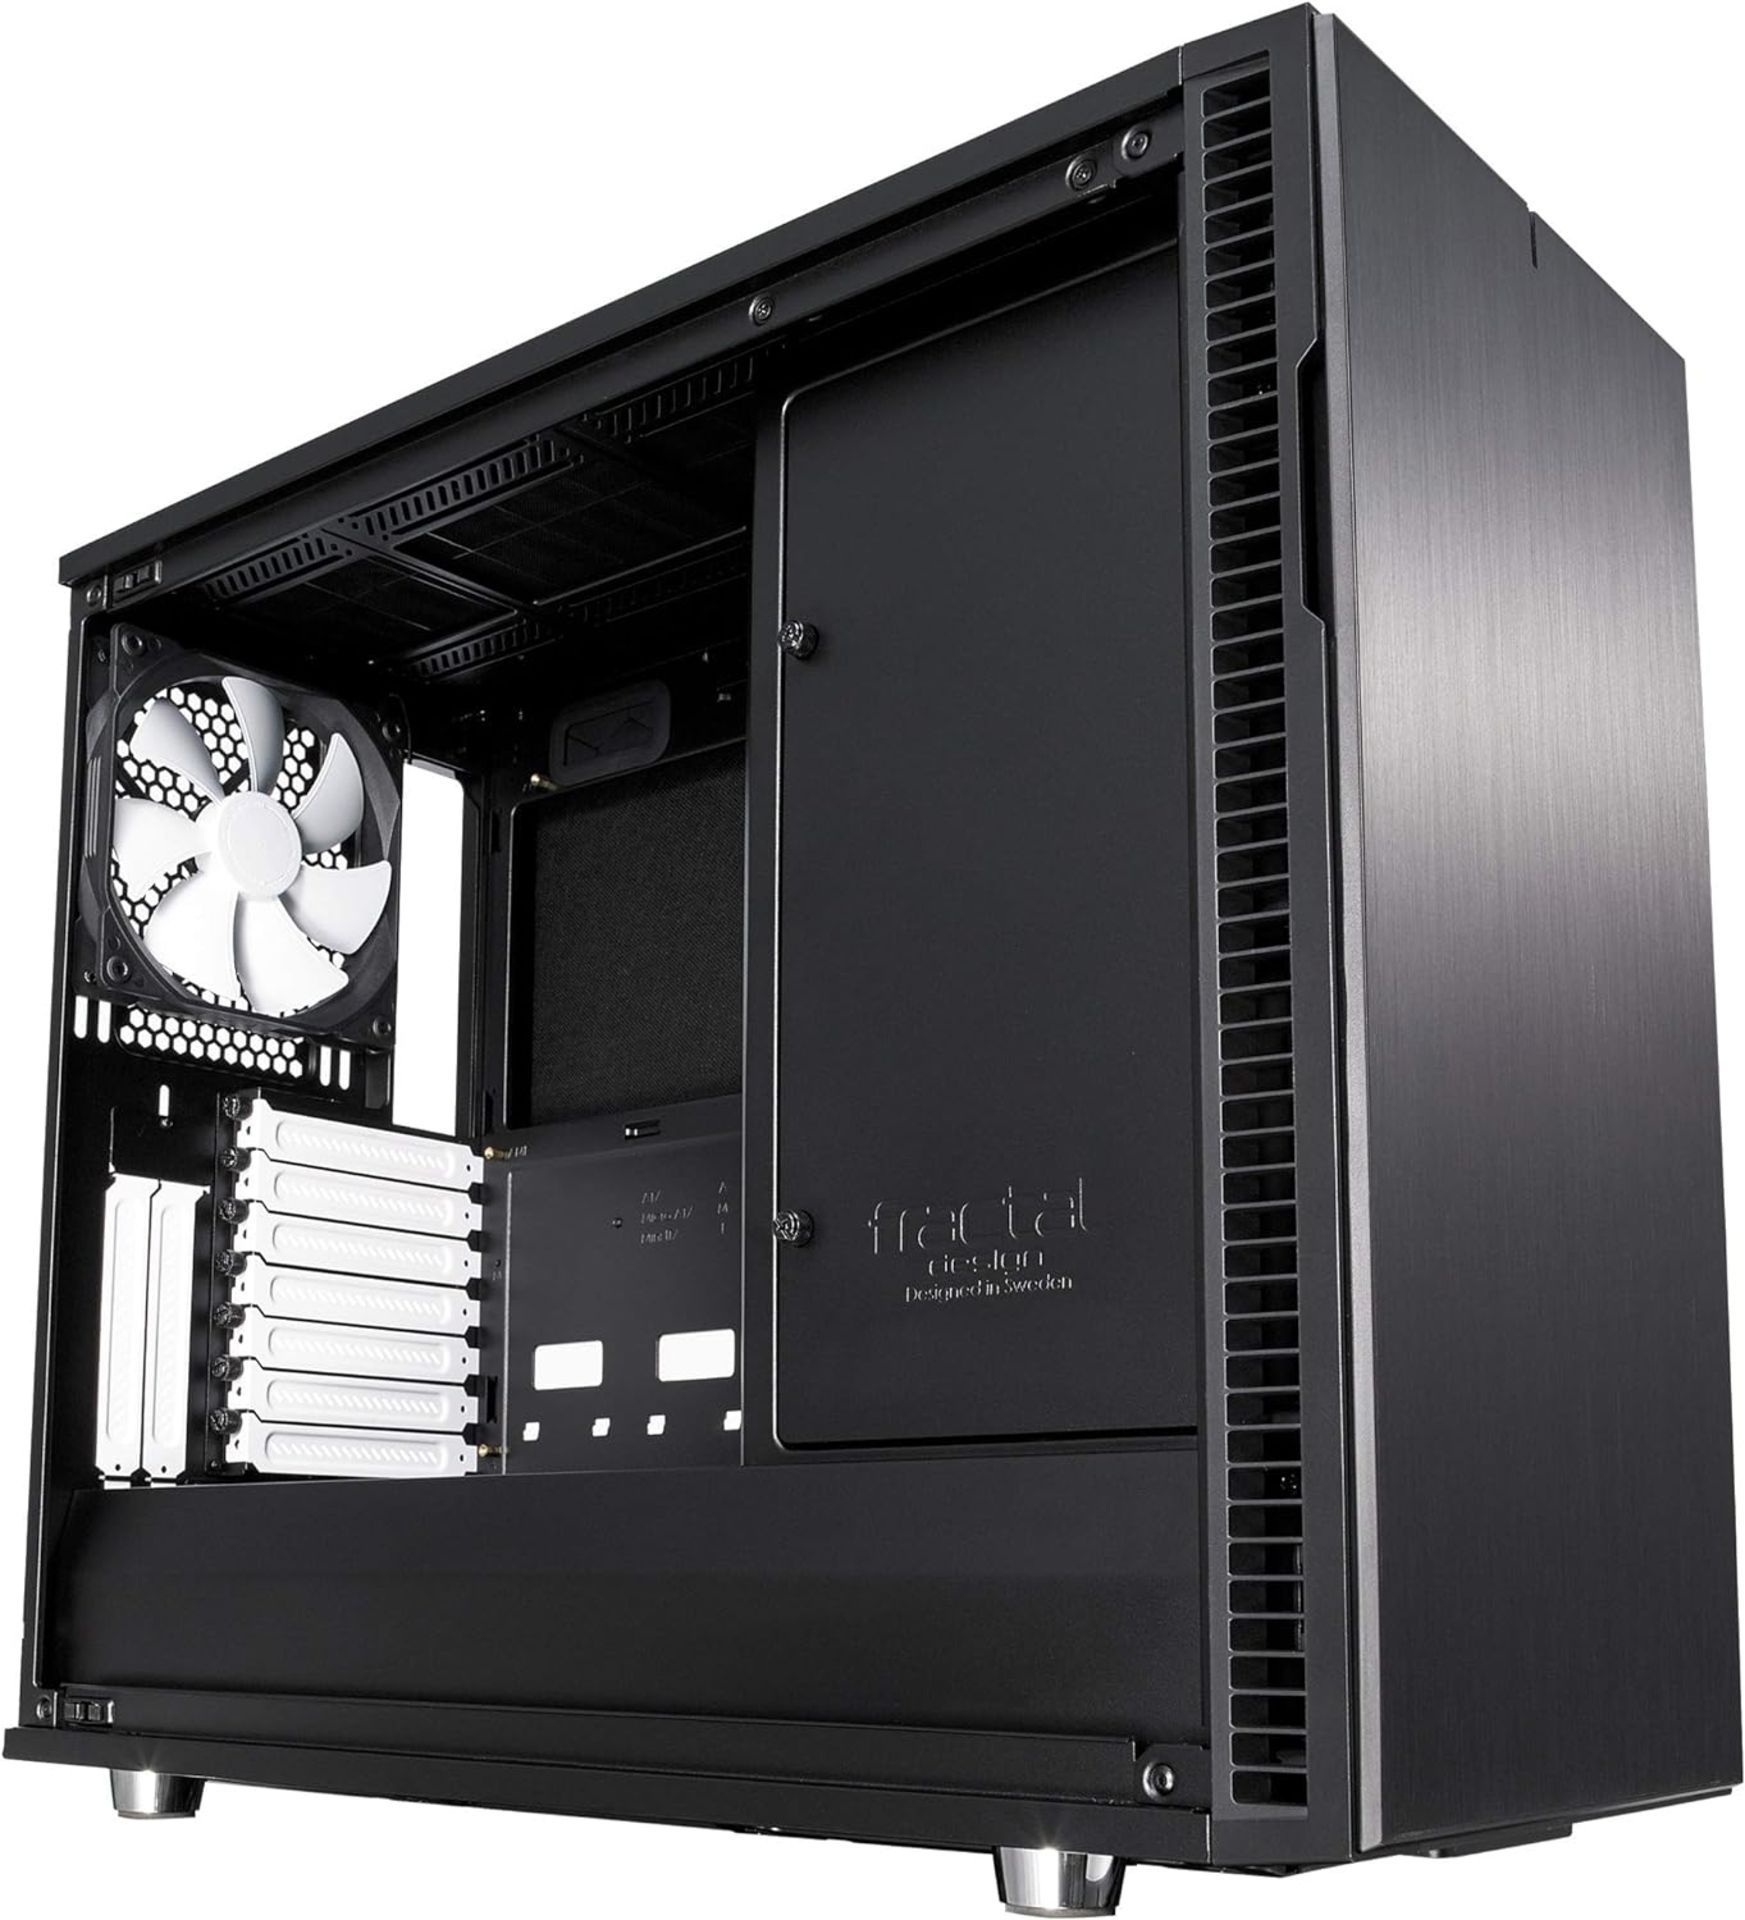 NEW & BOXED FRACTAL DESIGN Define R6 Mid Tower ATX Computer Case- BLACK. RRP £161.94. (R6-7). - Bild 3 aus 8